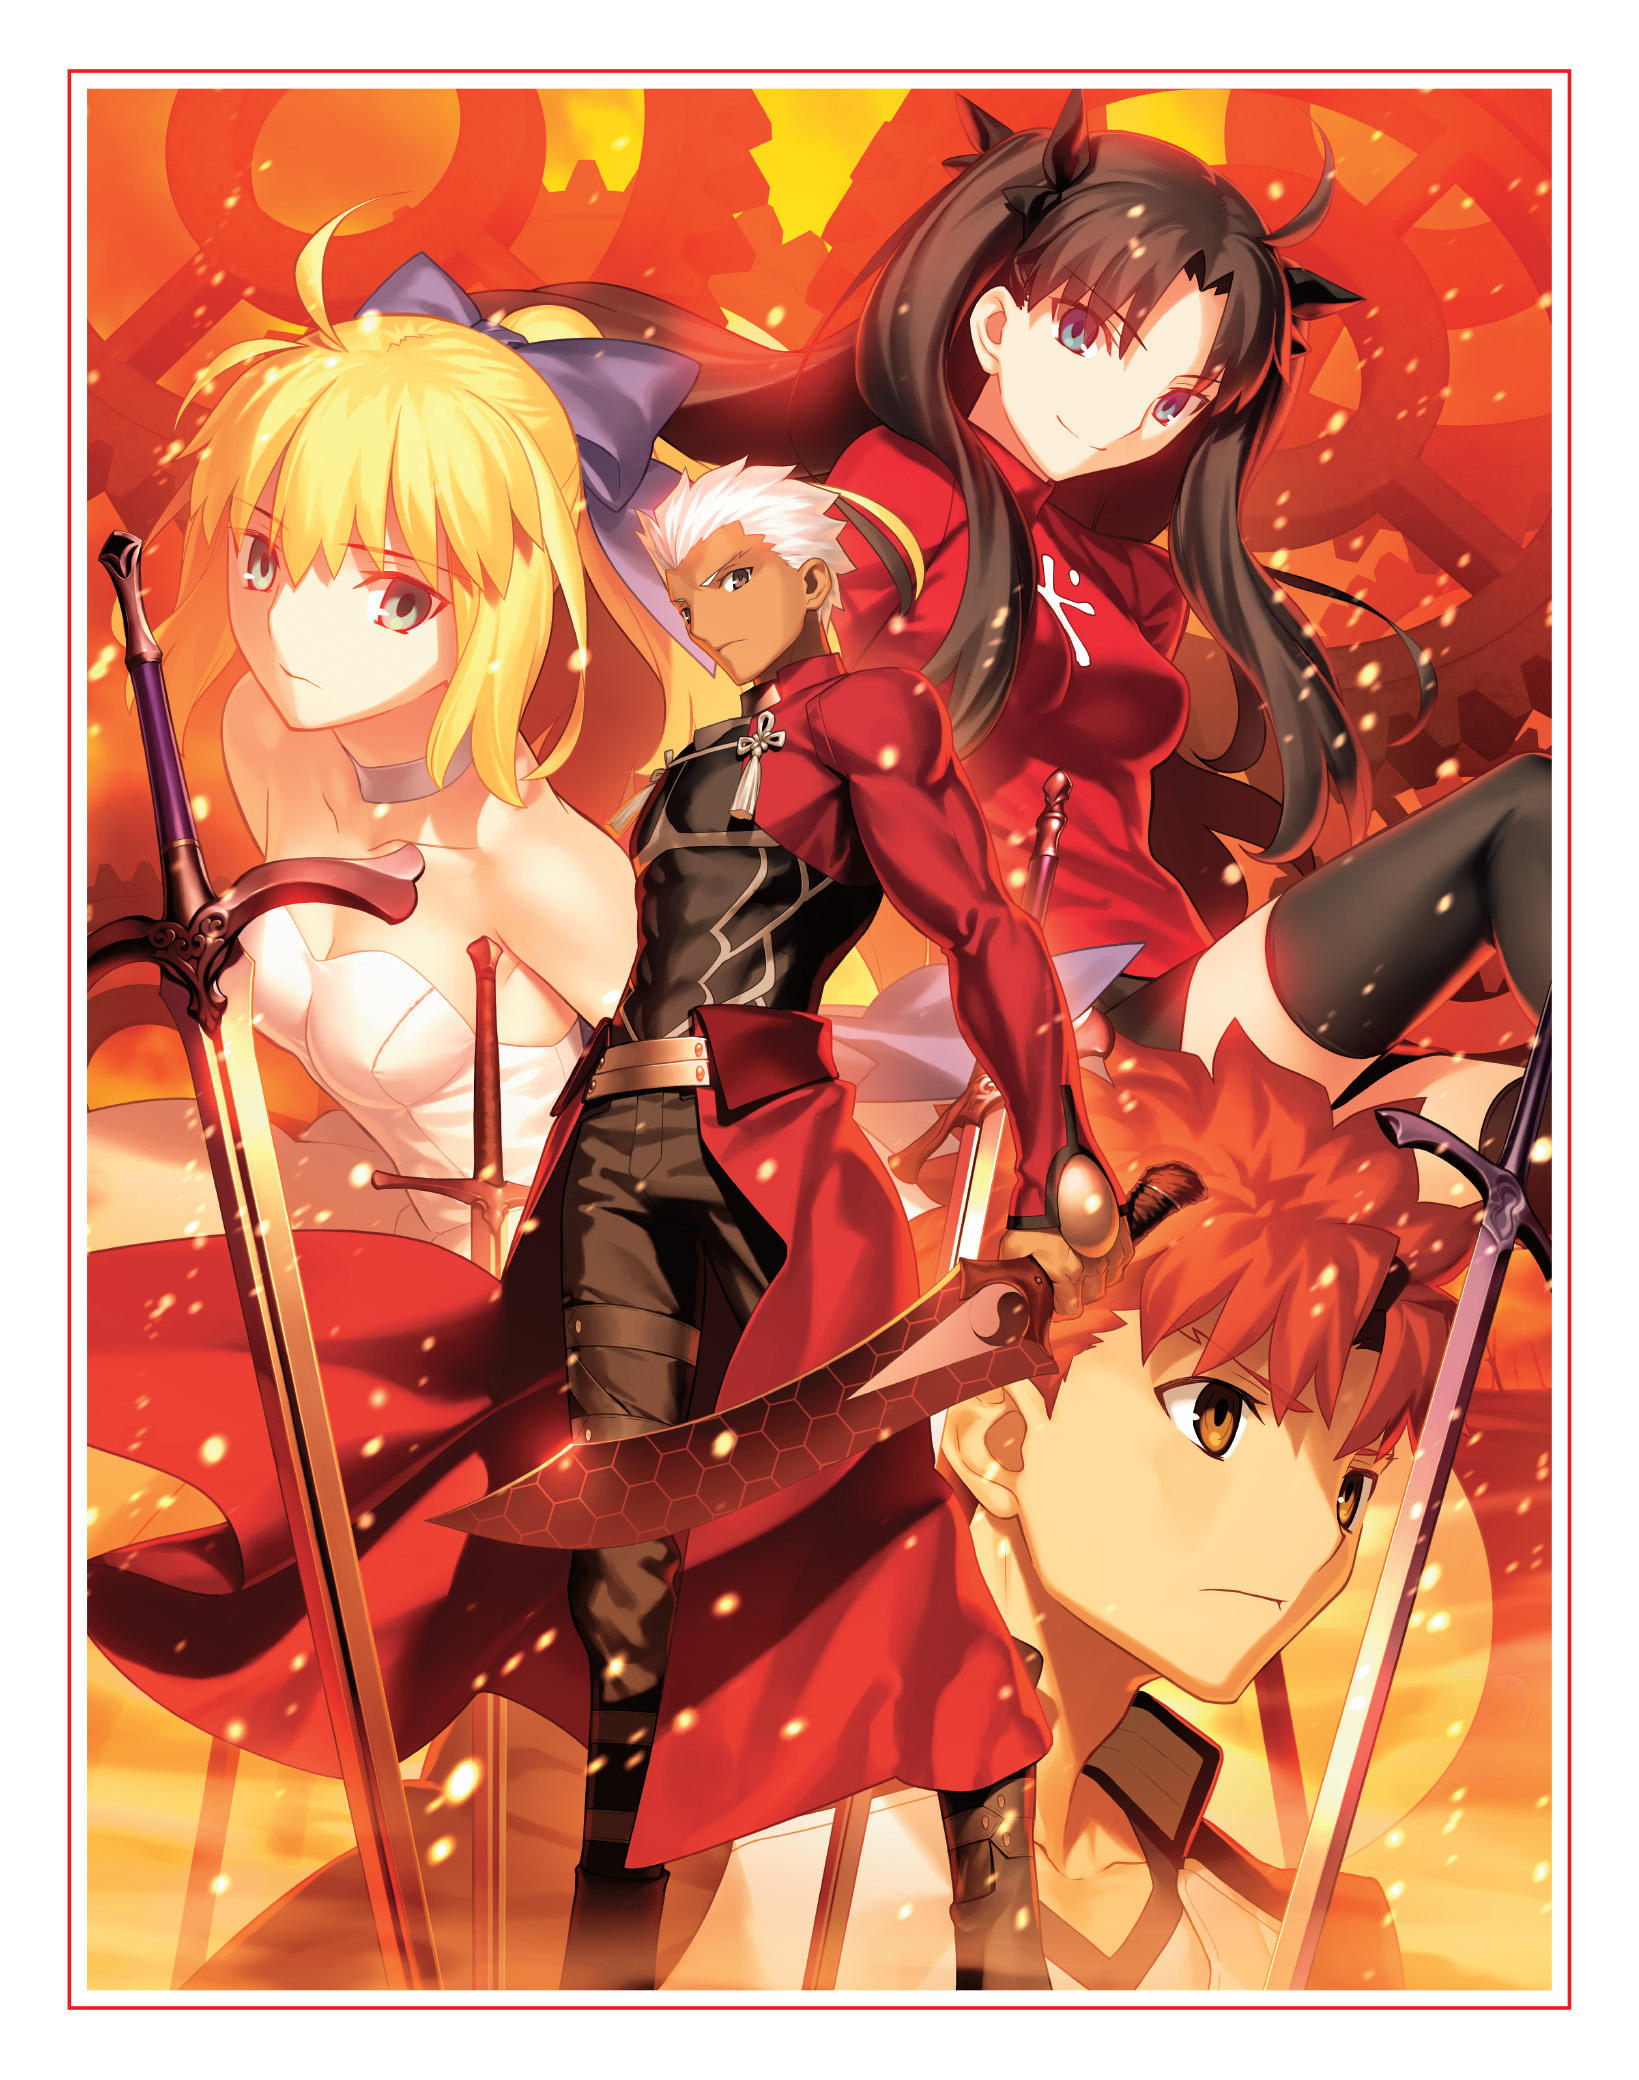  Fate / Stay Night: Complete Collection [Blu-ray] : Kinoko Nasu:  Movies & TV